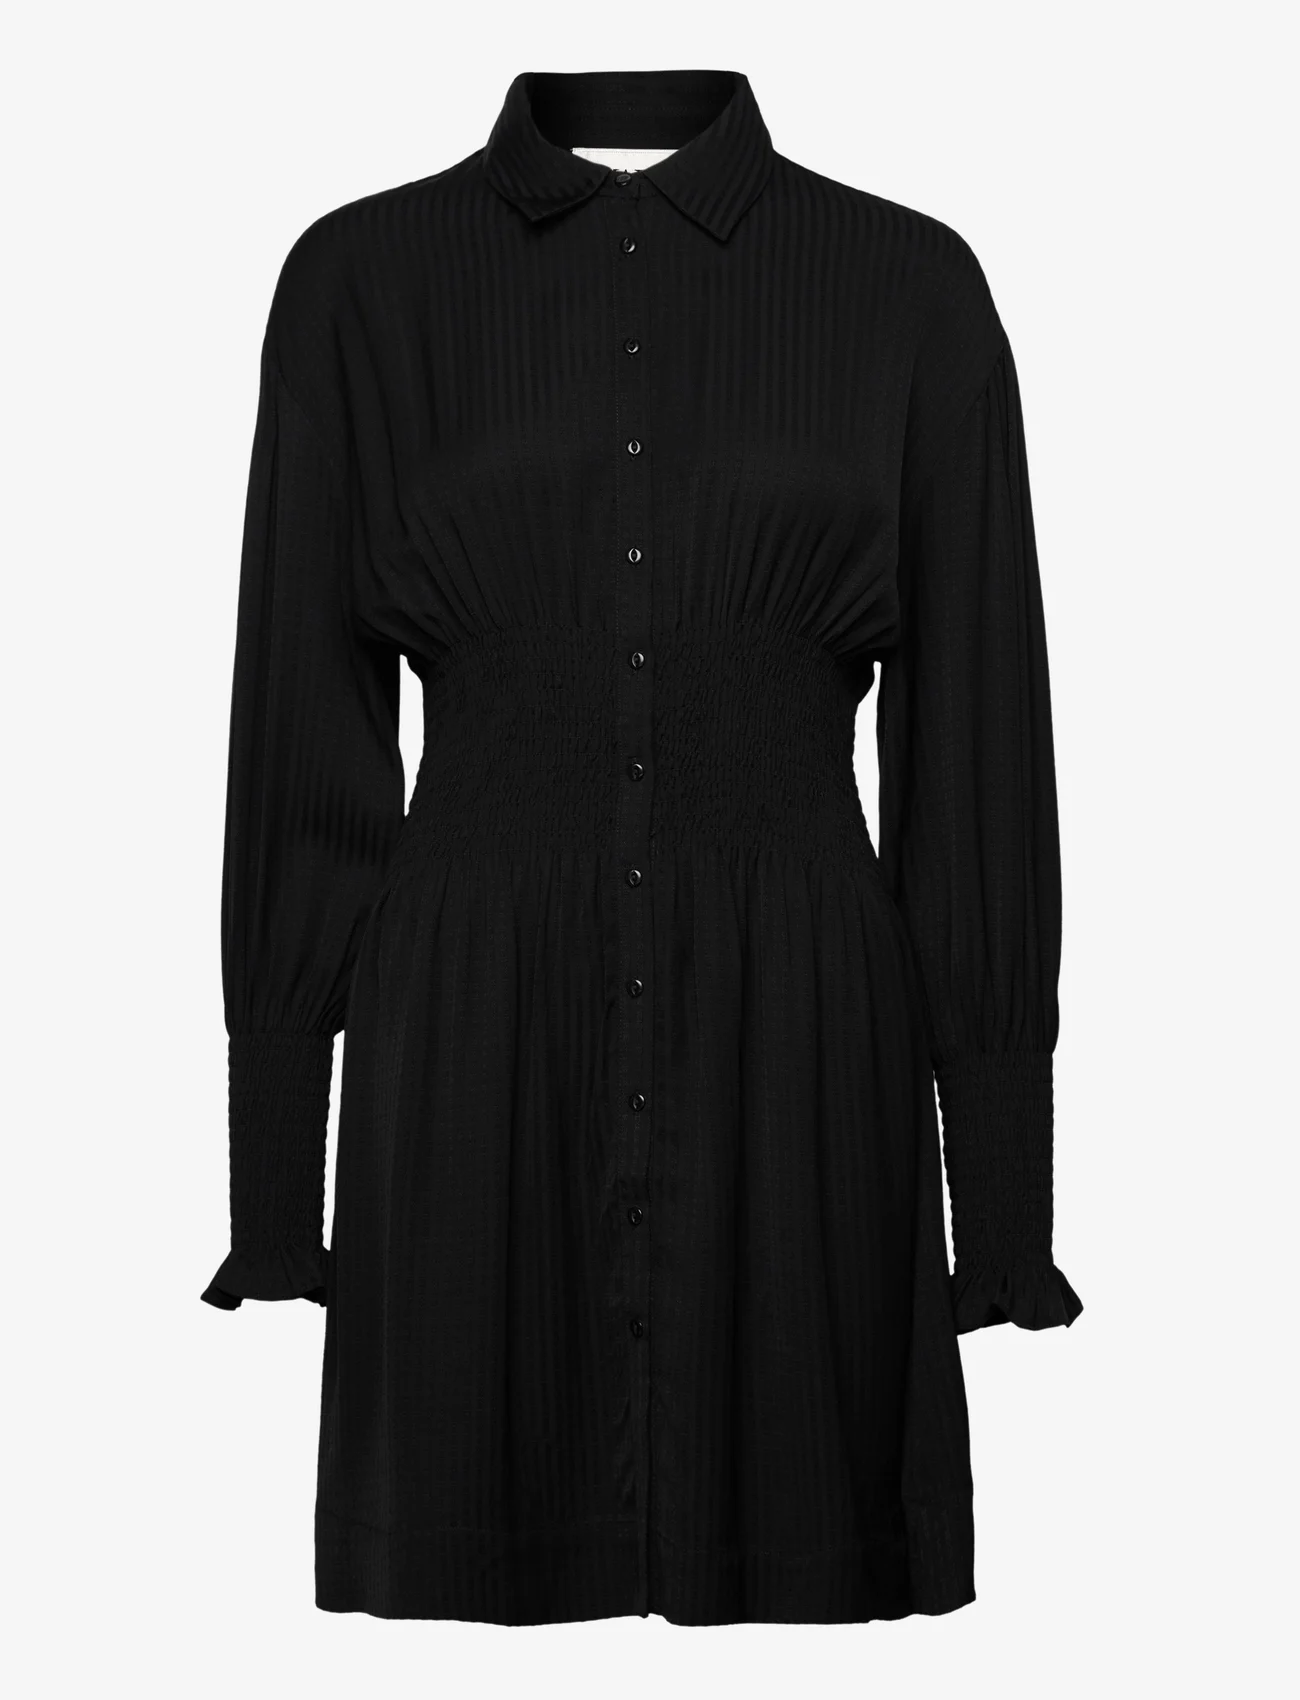 MAUD - Karoline Dress Short - paitamekot - black - 0